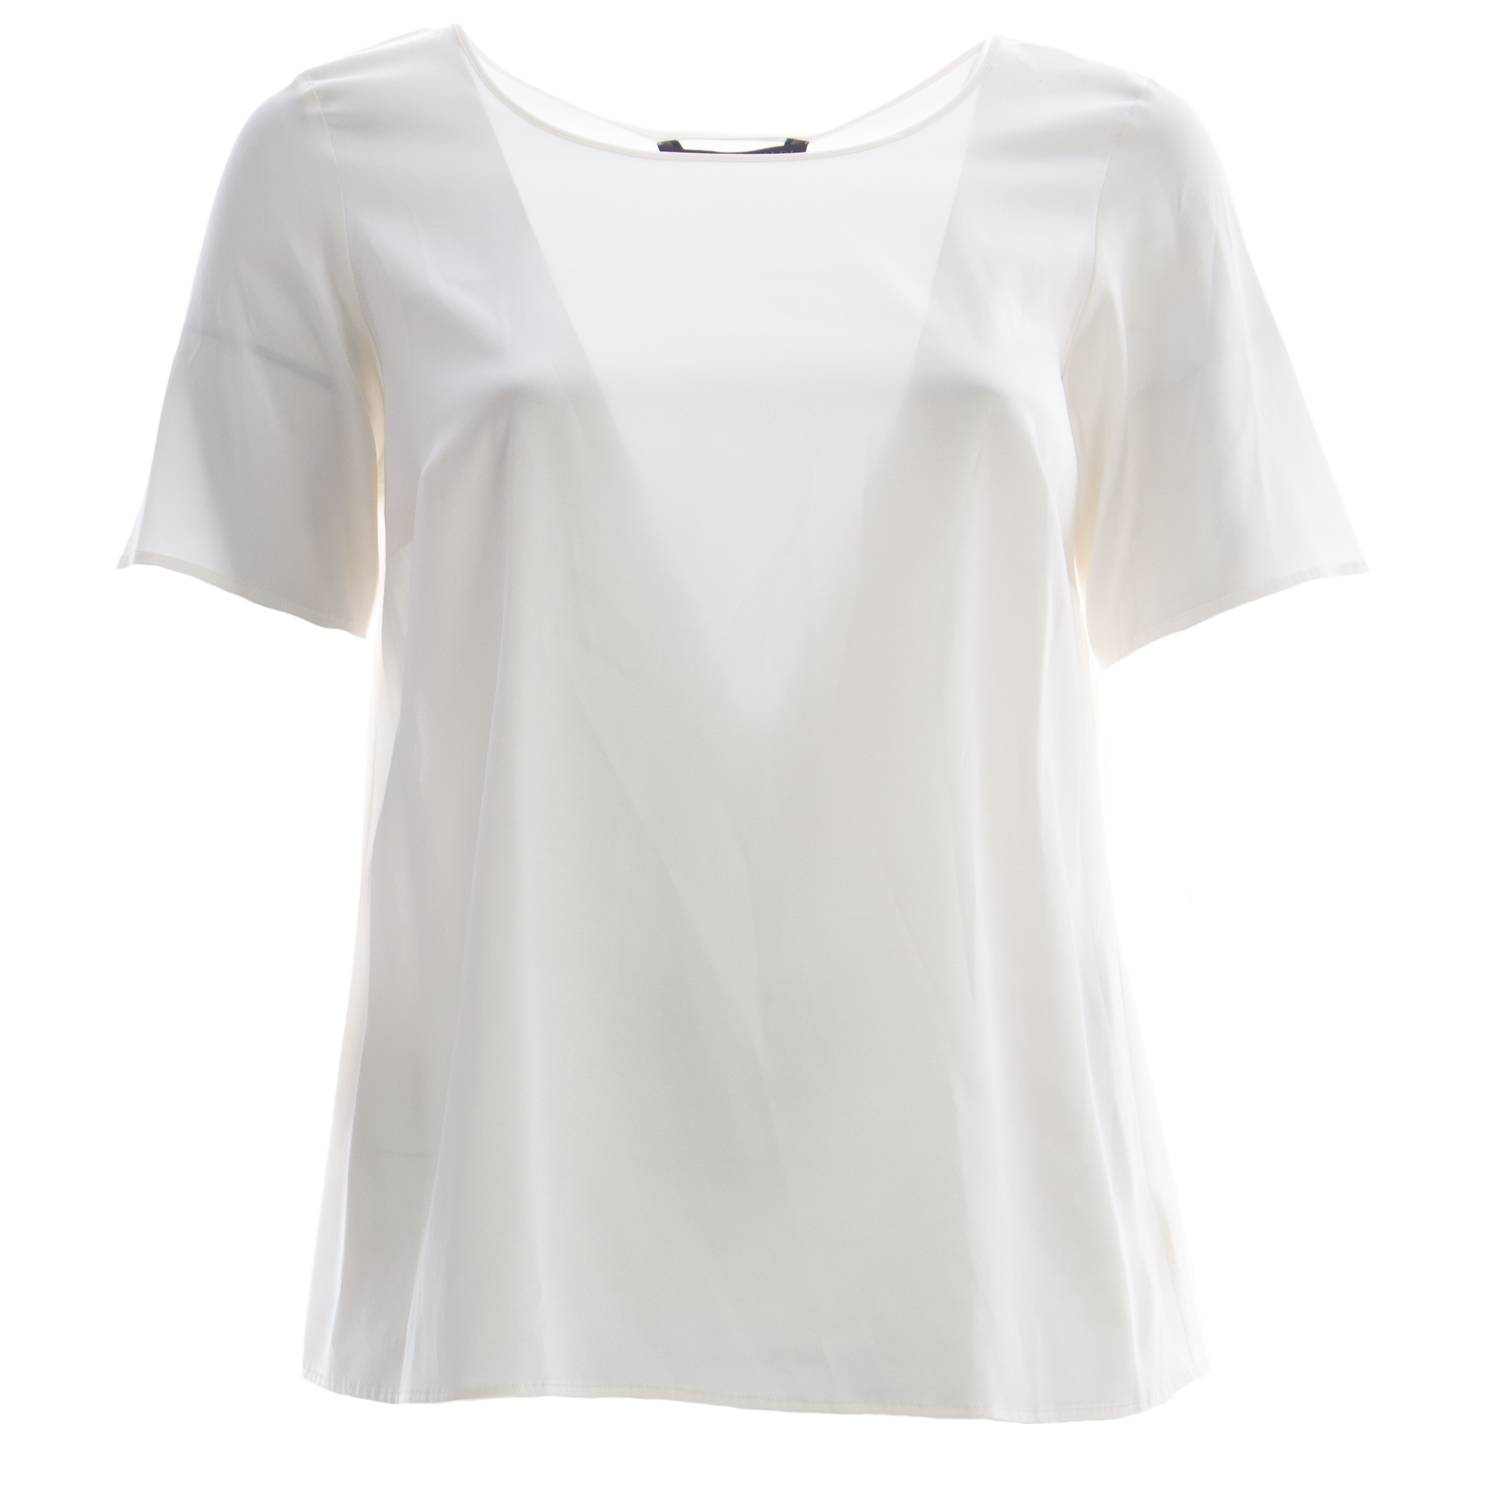 MARINA RINALDI Women's Bilancia Short Sleeve Silk Blouse $435 NWT | eBay